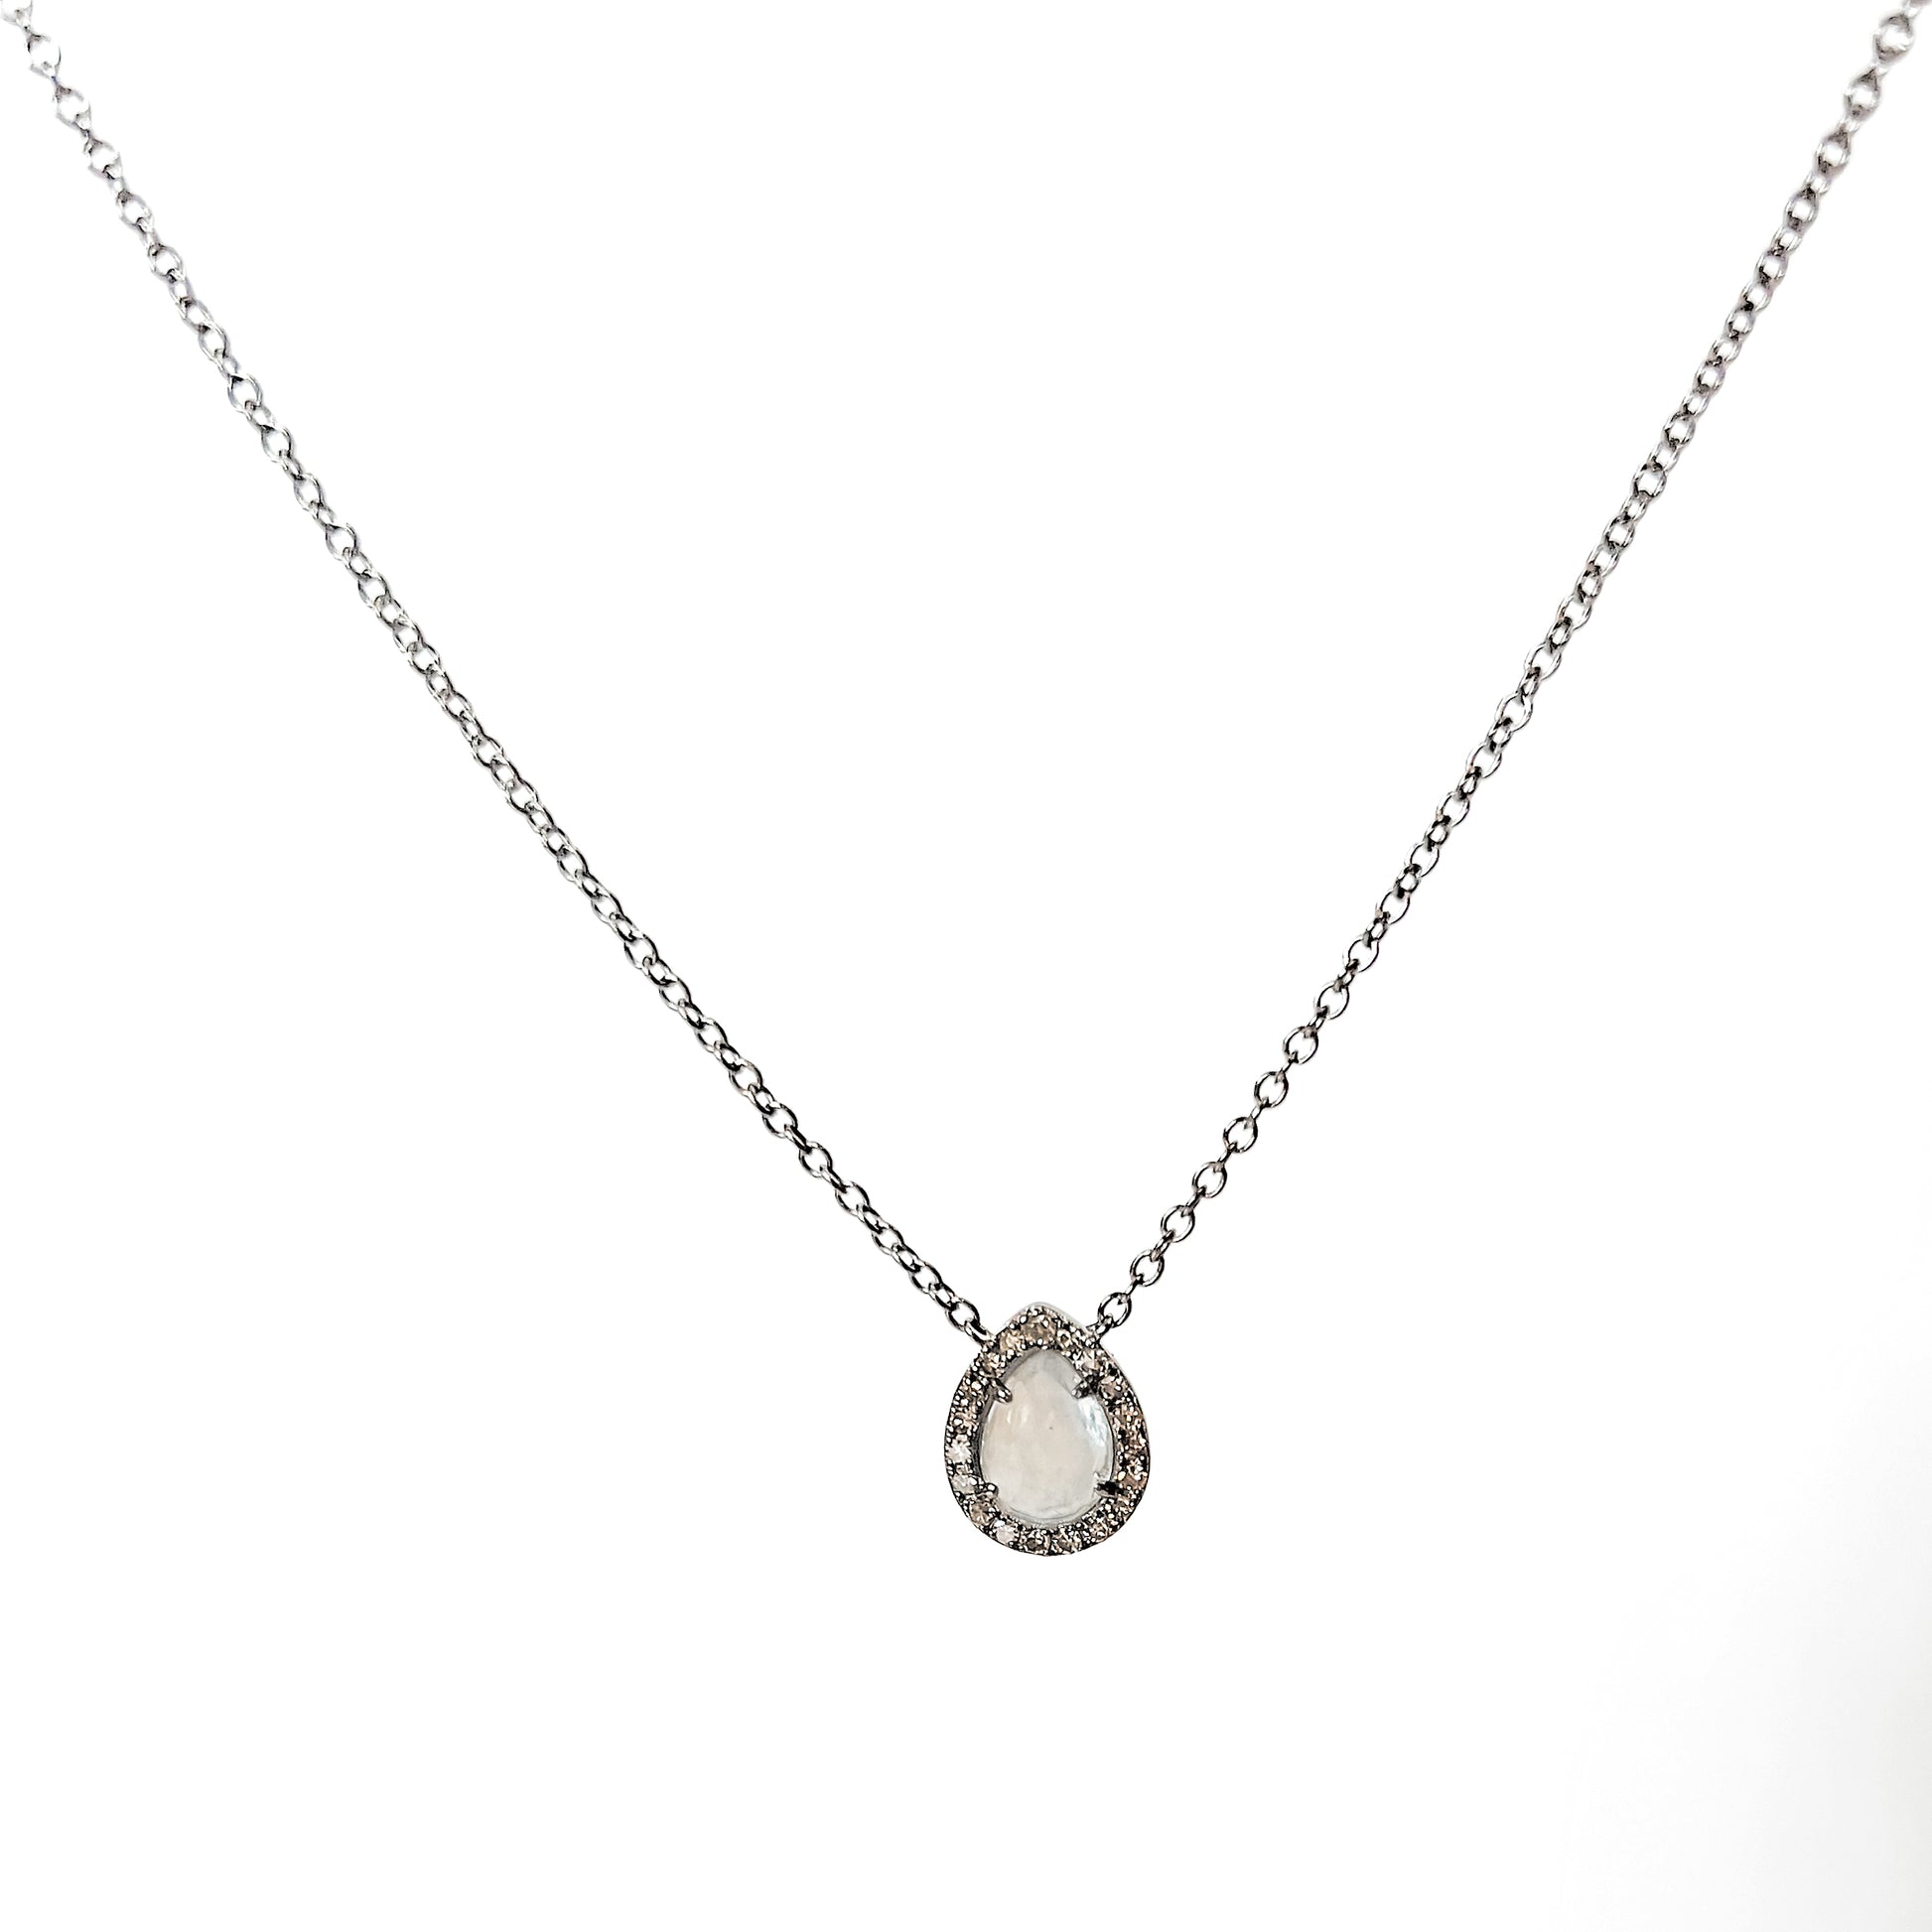 Oxidized Sterling Silver, Moonstone + Pave Diamond Teardrop Pendant Necklace